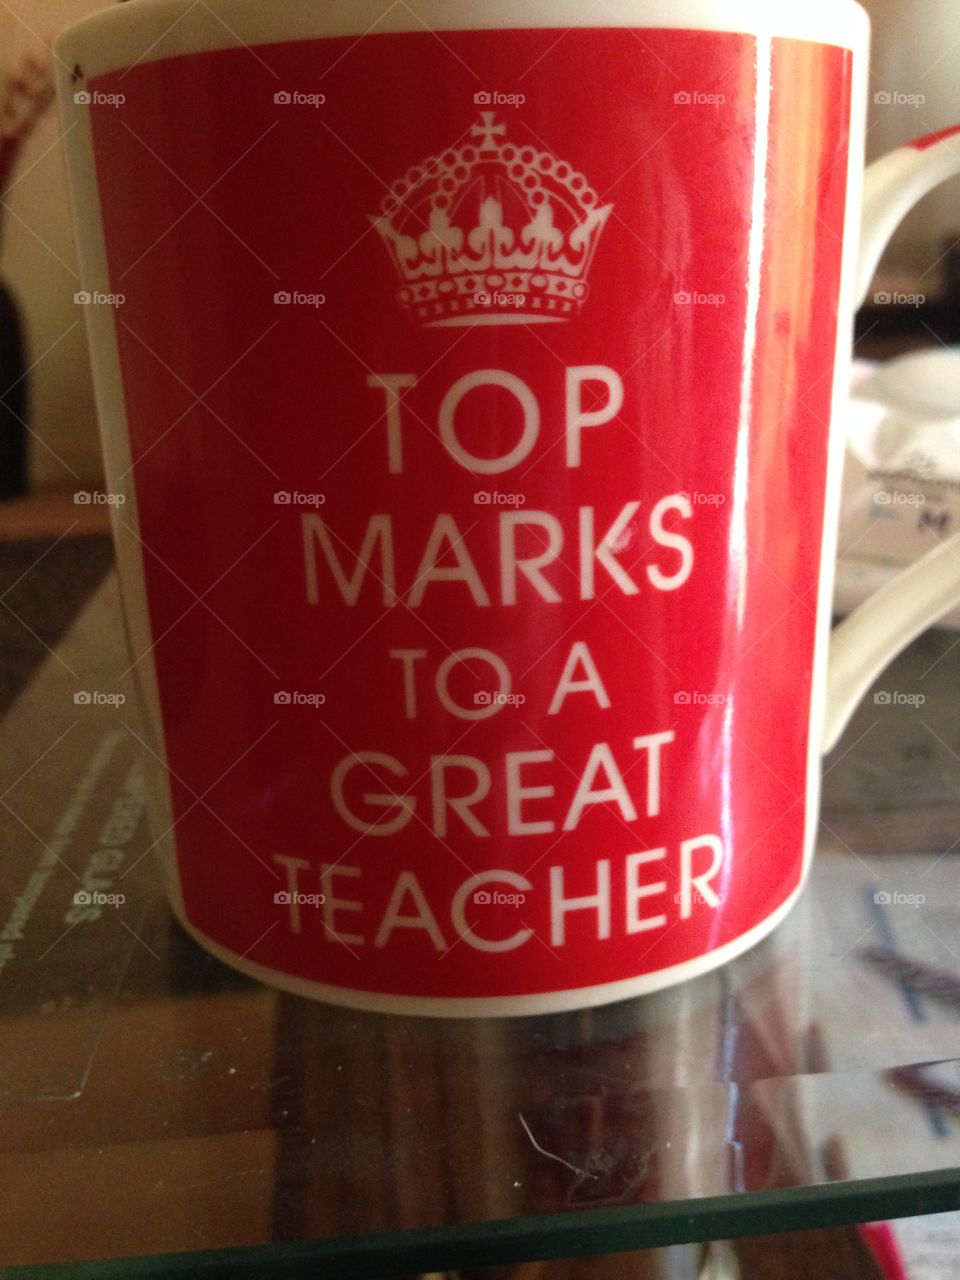 Top marks to a great teacher mug/cup